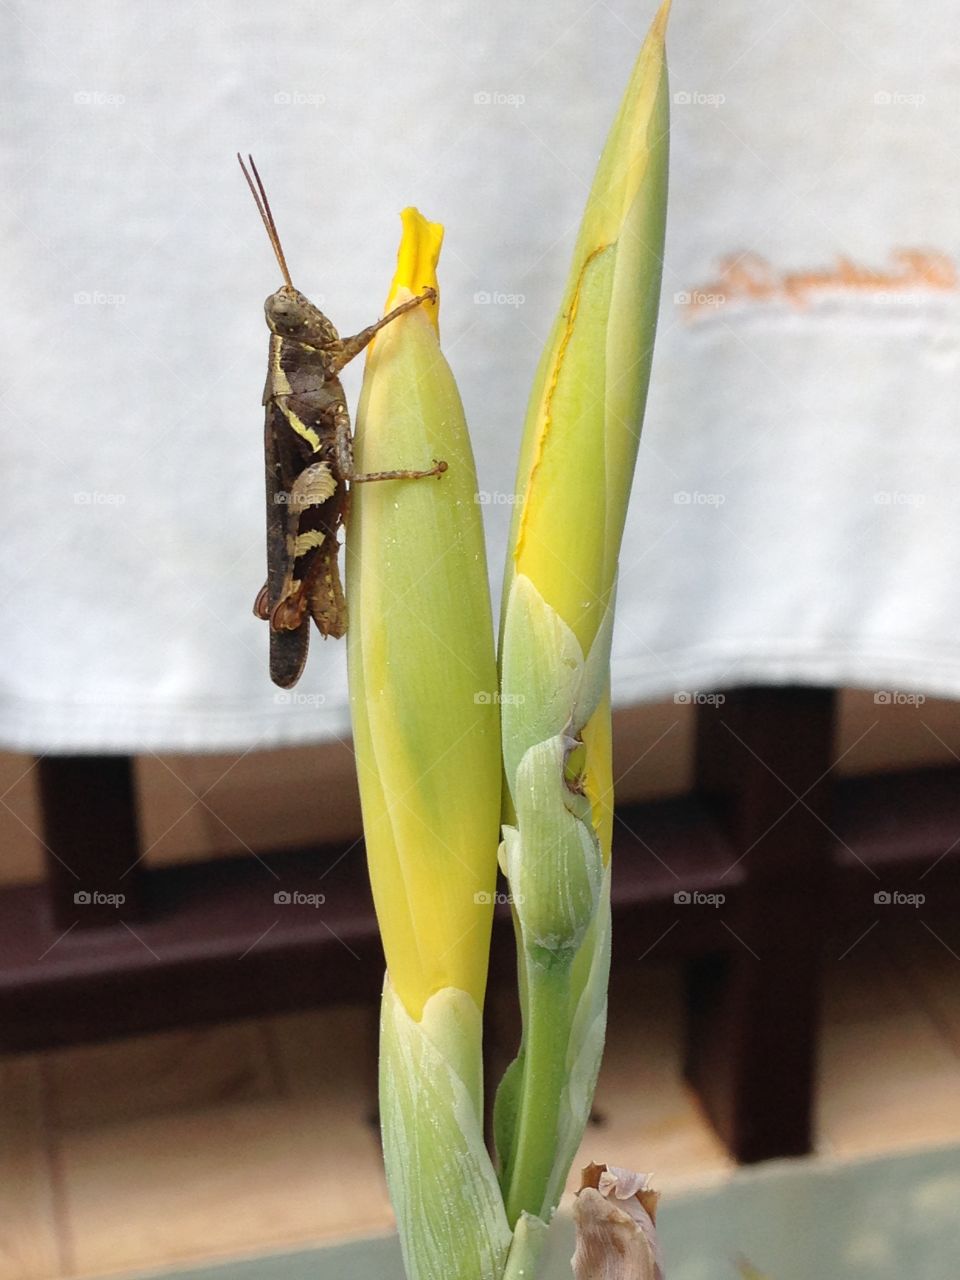 Grasshopper on flower. Grasshopper Koh Samui Thailand 